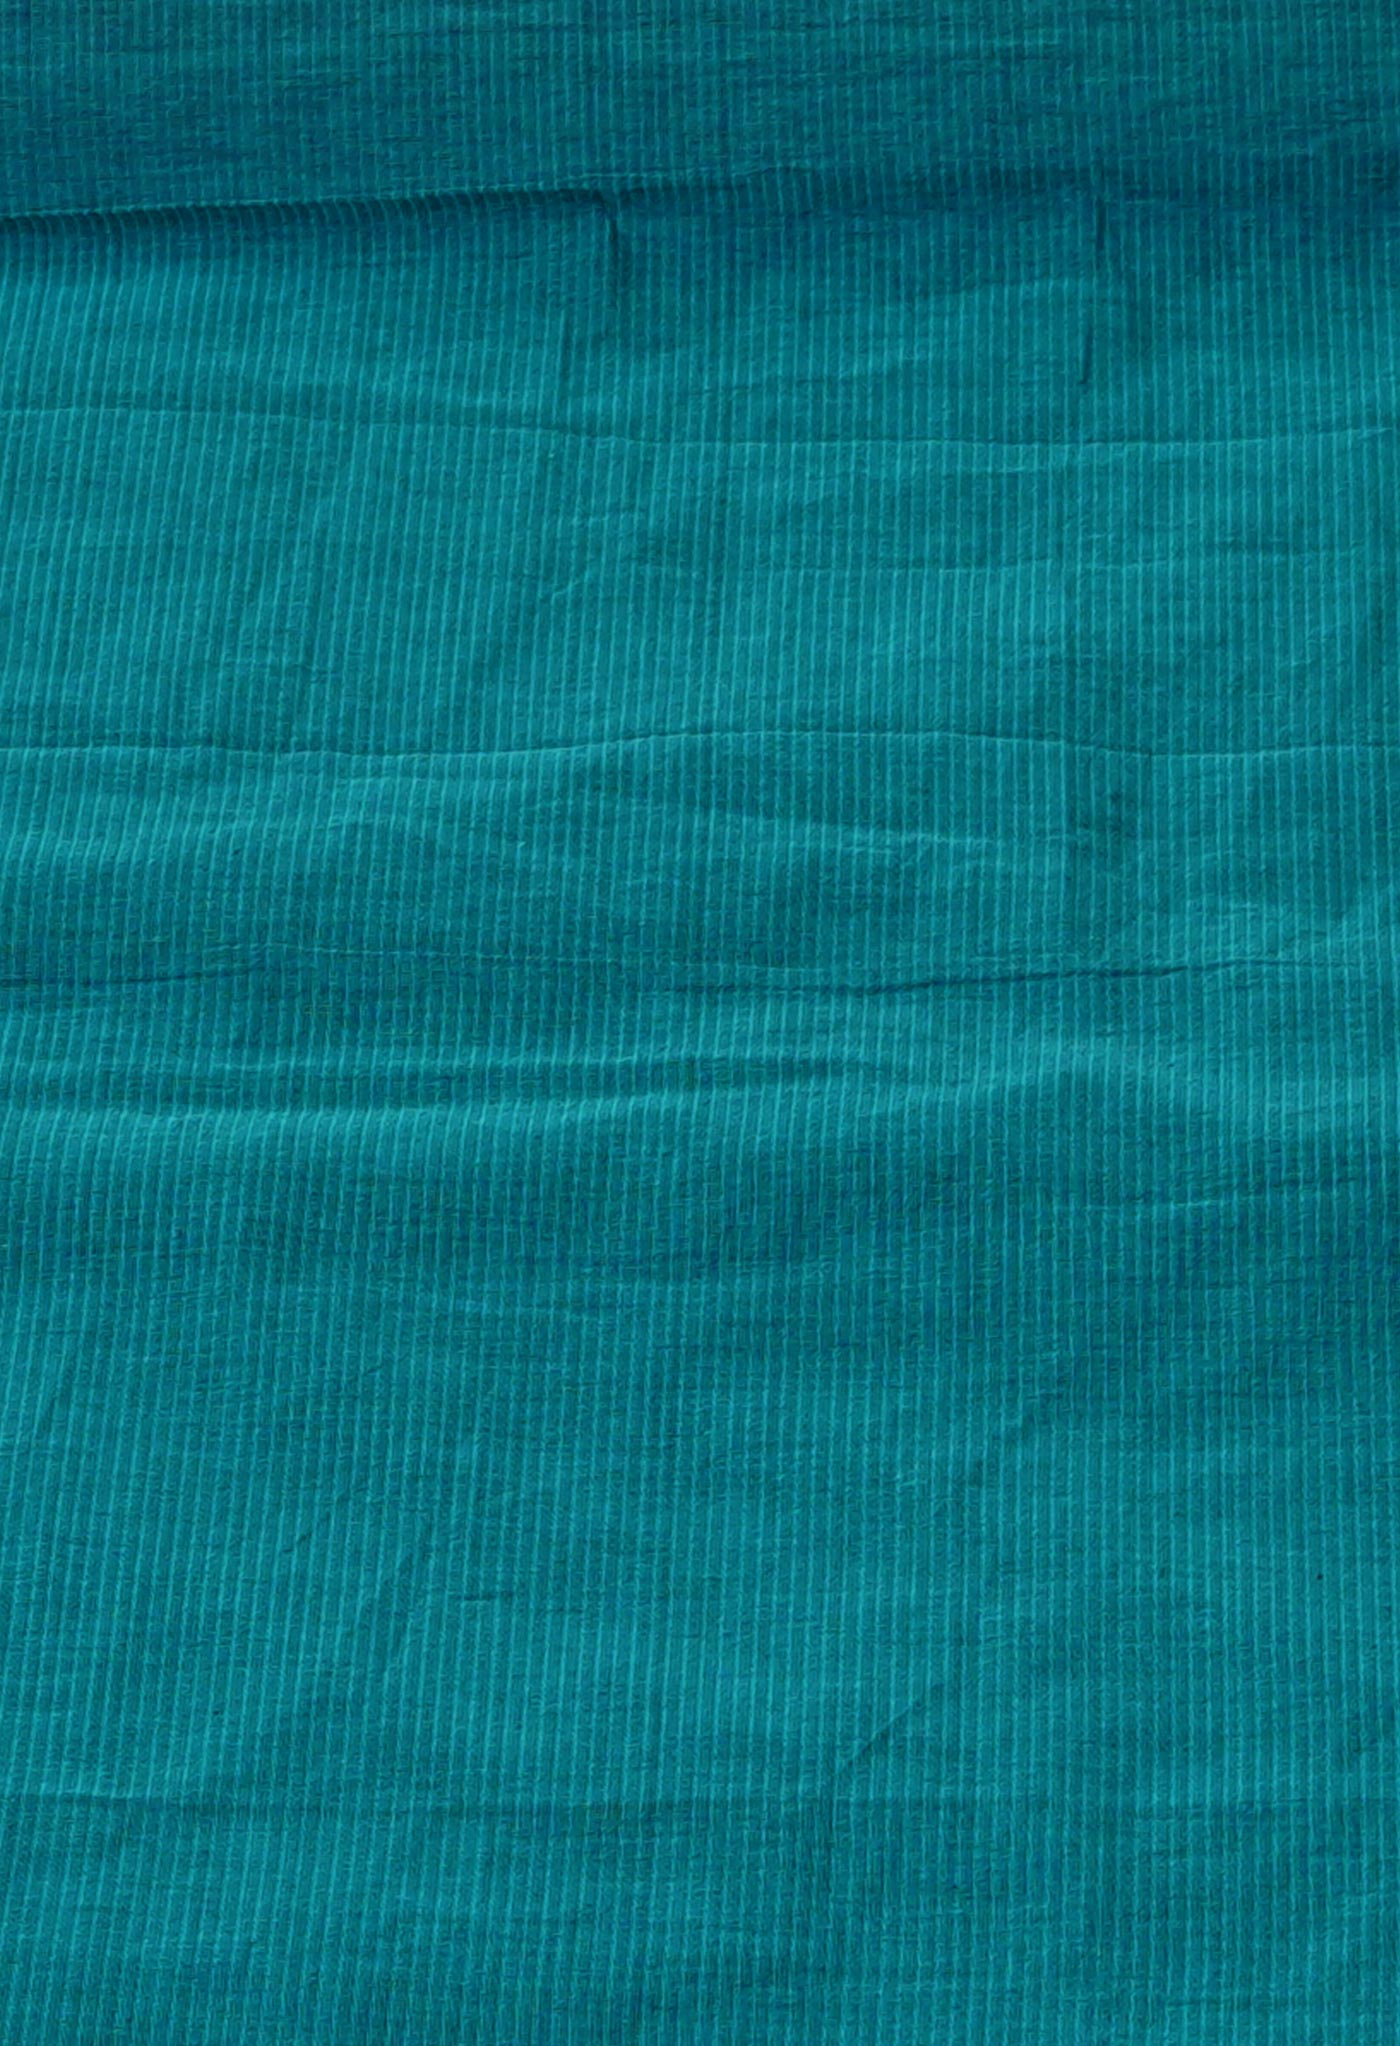 Green Pure Handloom Mangalagiri Cotton Saree